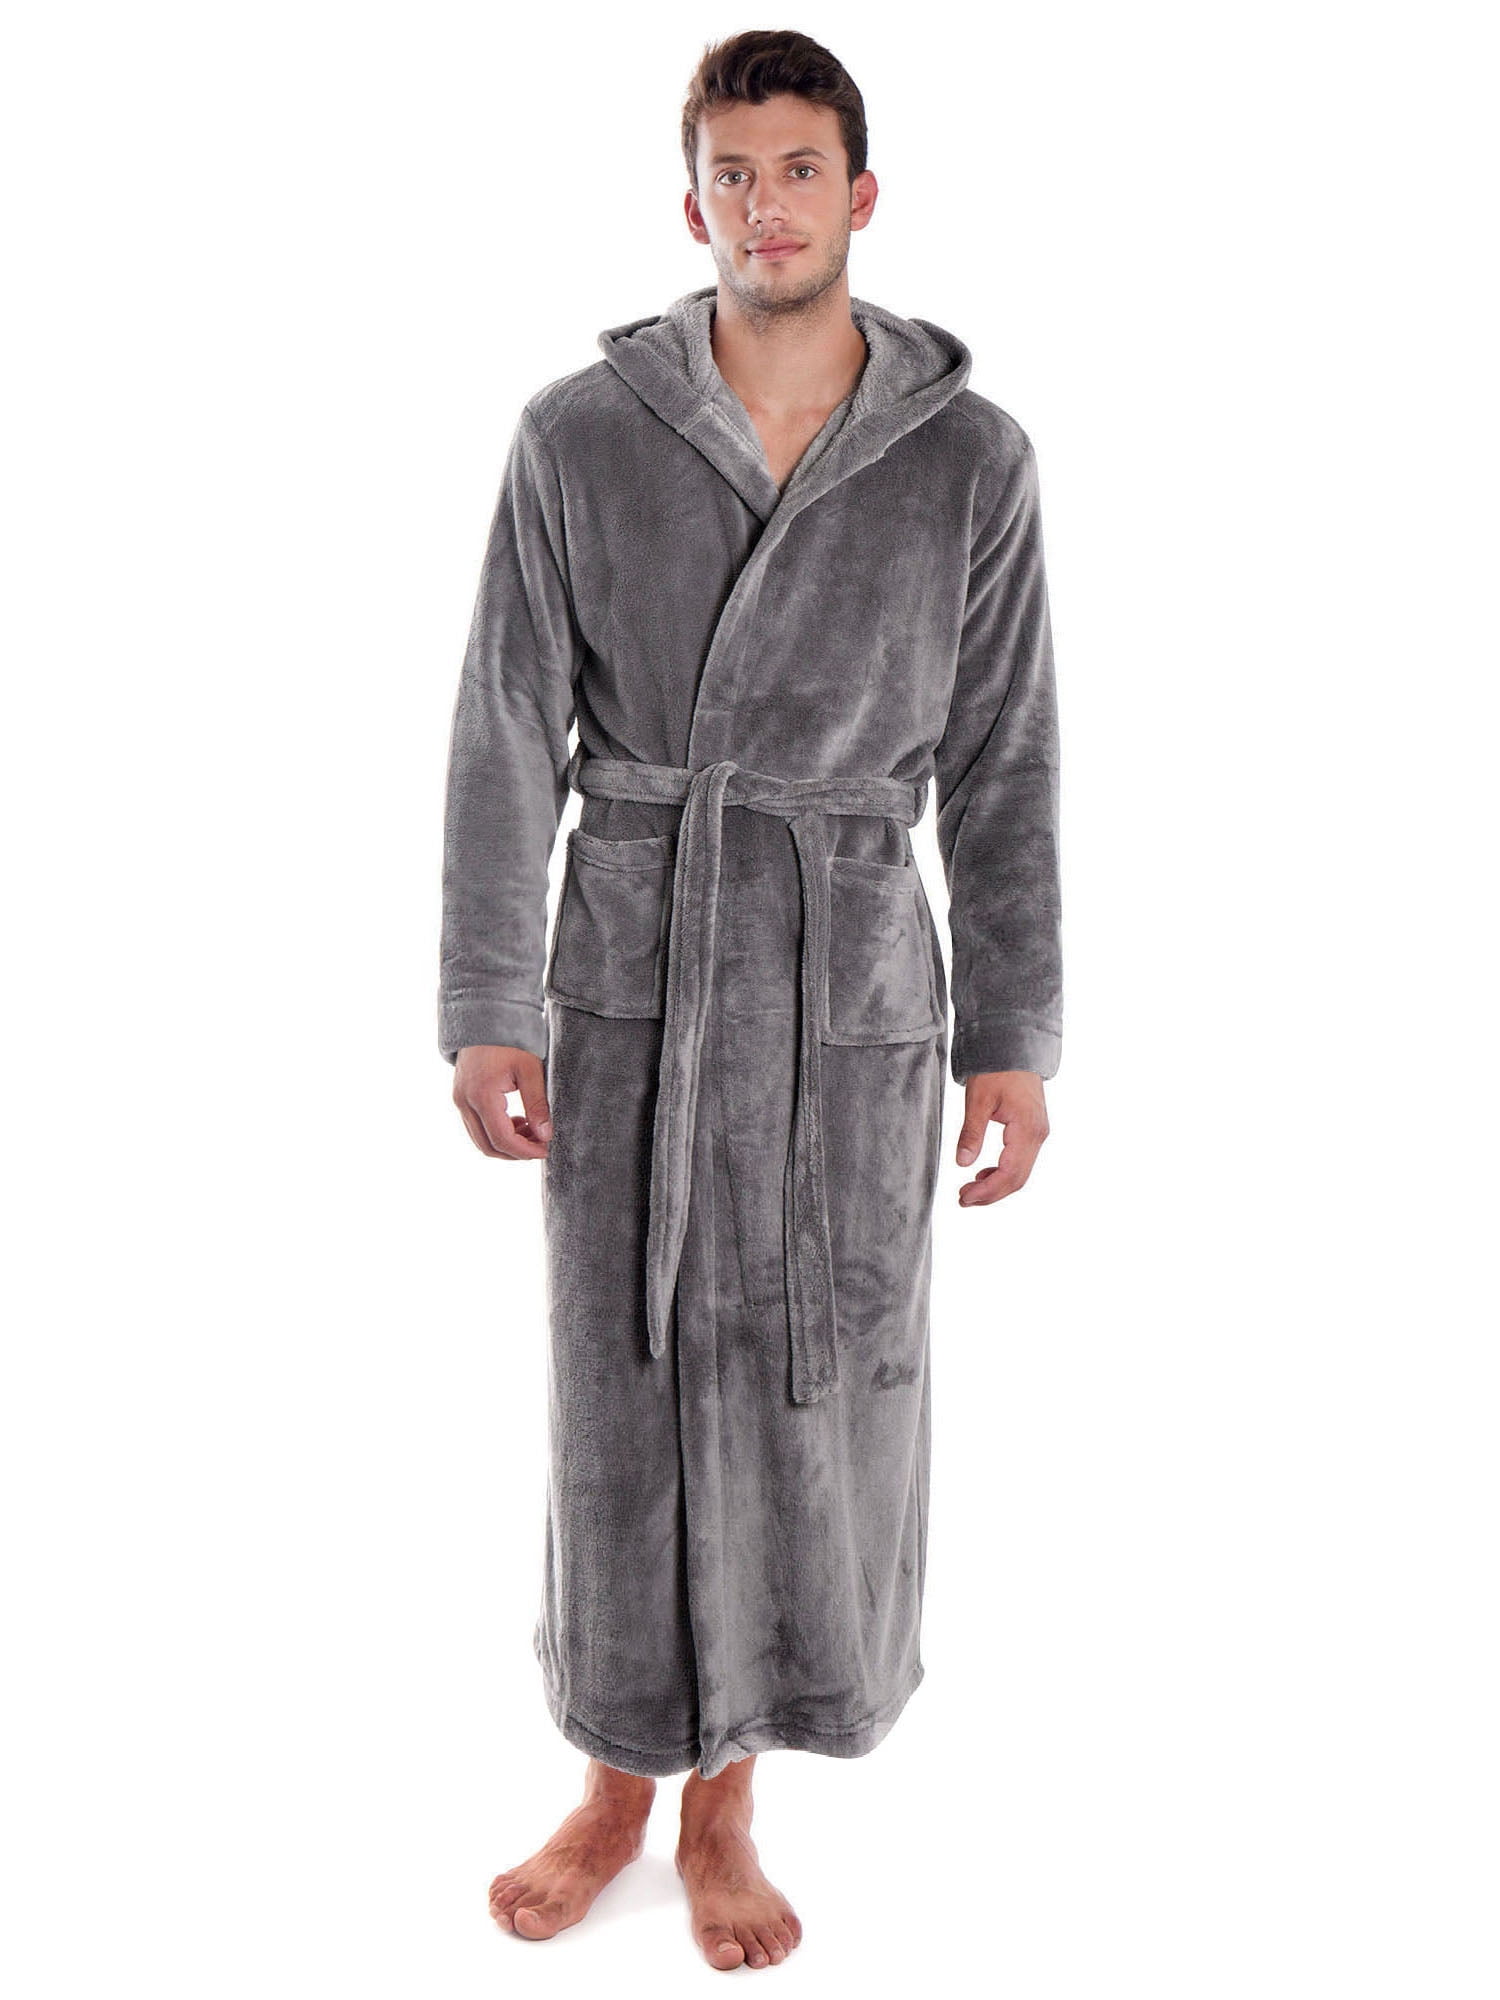 Womens Robe Soft Hooded Bath Robes,Grey,L-XL Men/XL-2XL Women - Walmart.com